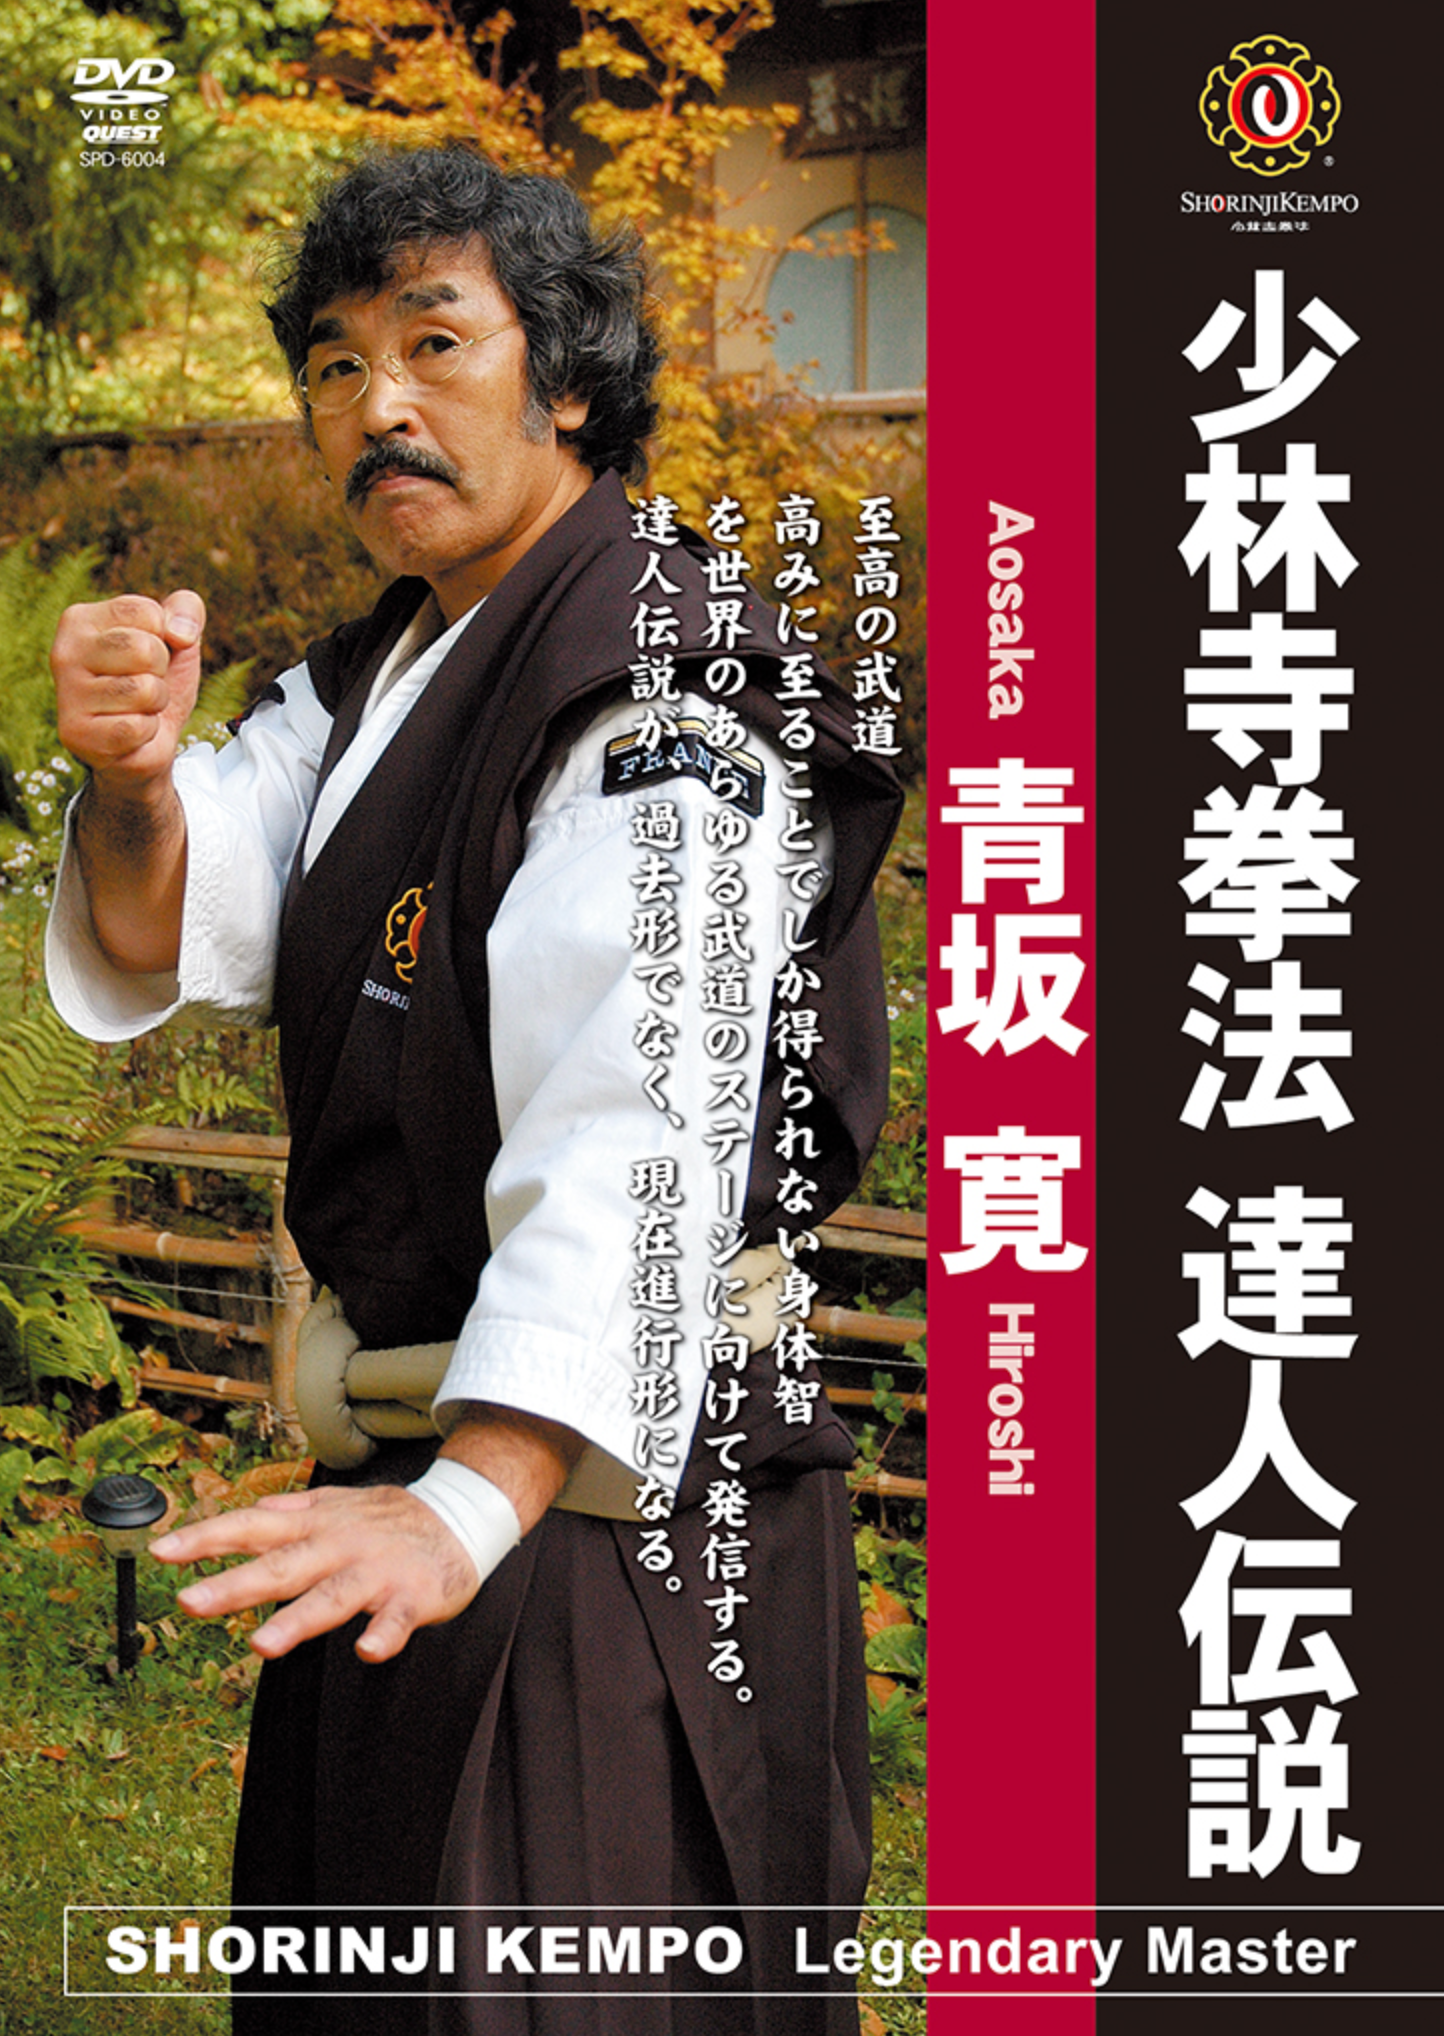 Shorinji Kempo World: Legendary Master Hiroshi Aosaka DVD - Budovideos Inc